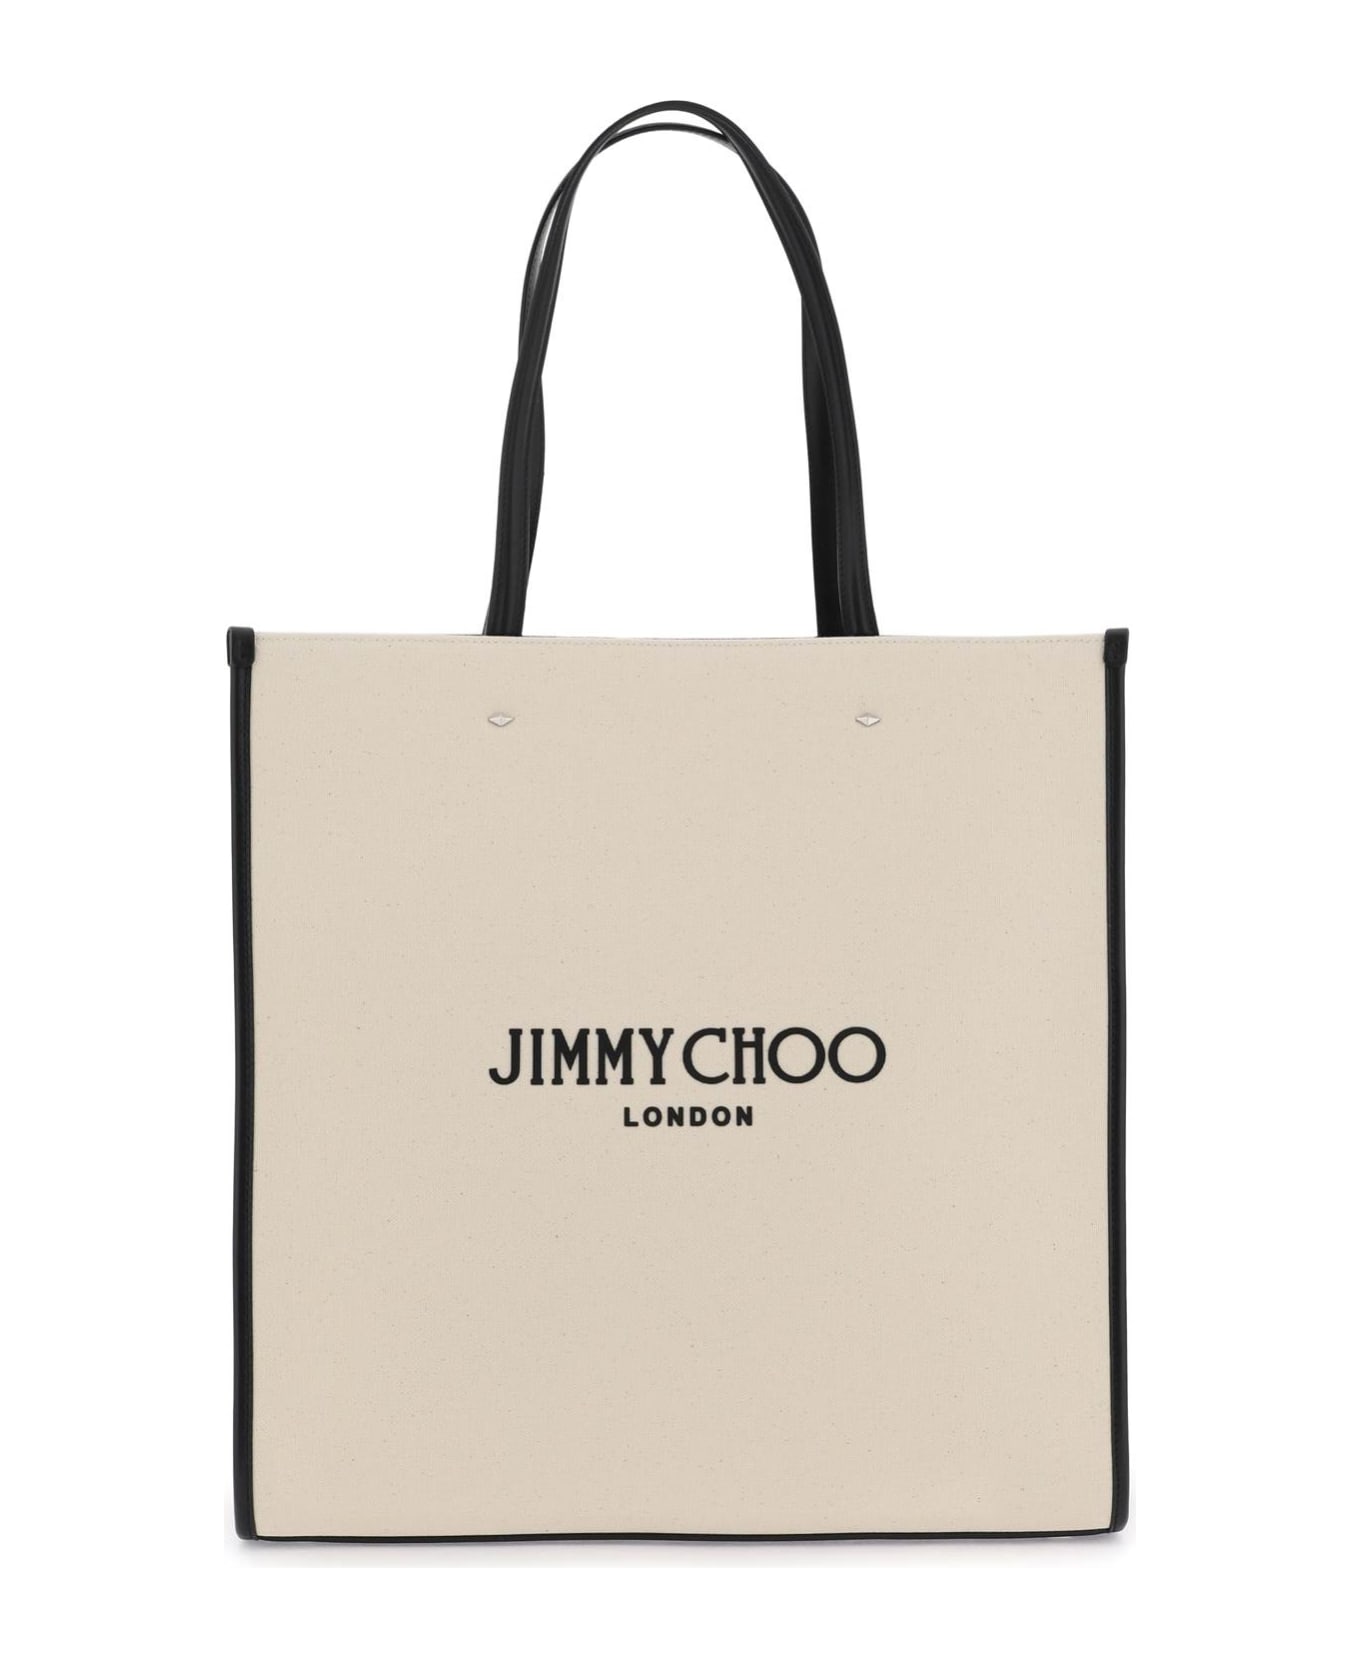 Jimmy Choo N/s Canvas Tote Bag - NATURAL BLACK SILVER (White)